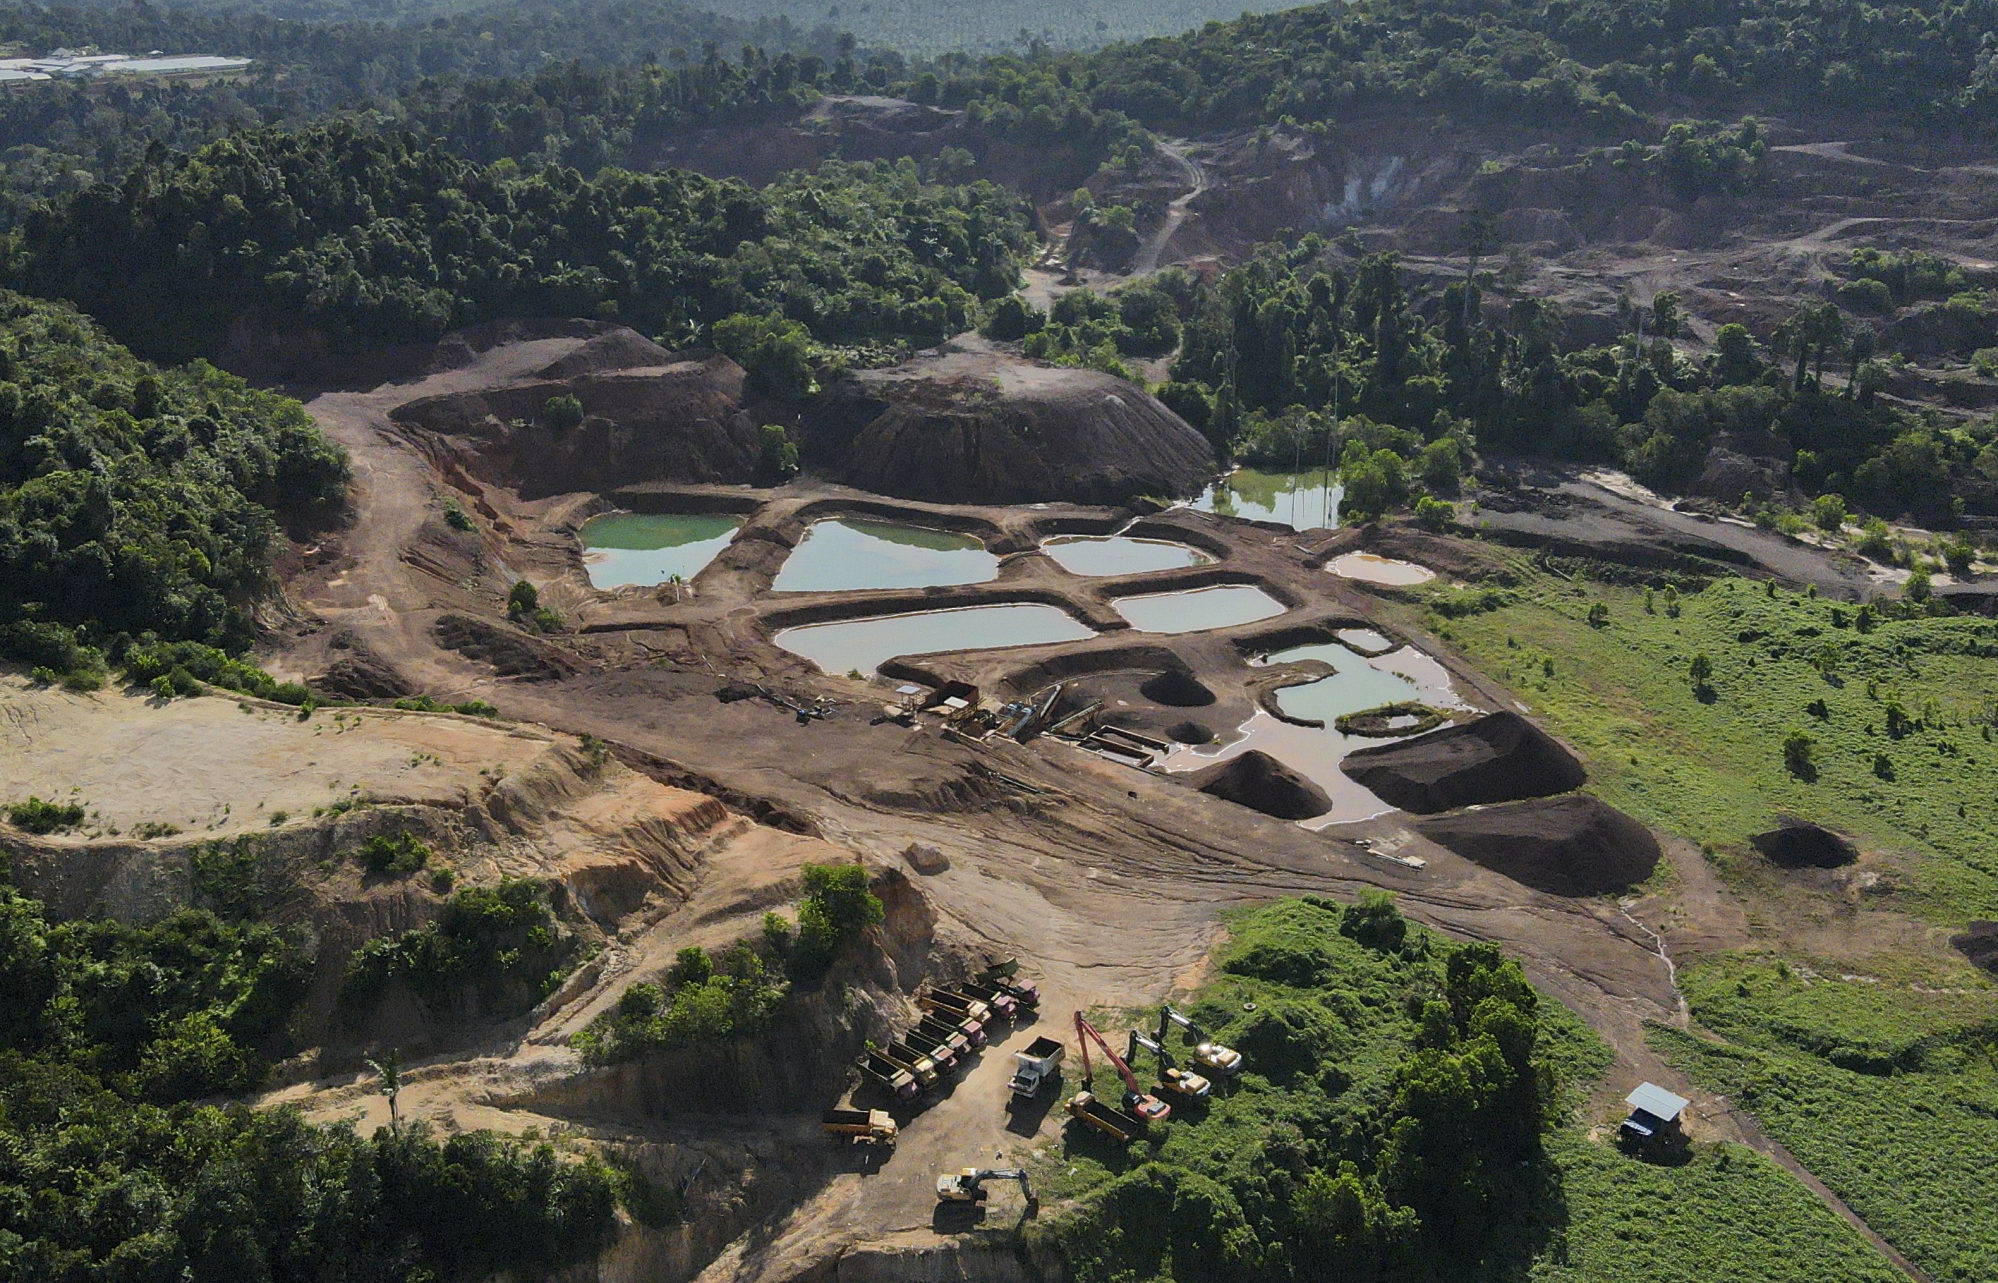 Mining pits and excavation vehicles are seen around Tasik Chini. Photo: Azneal Ishak